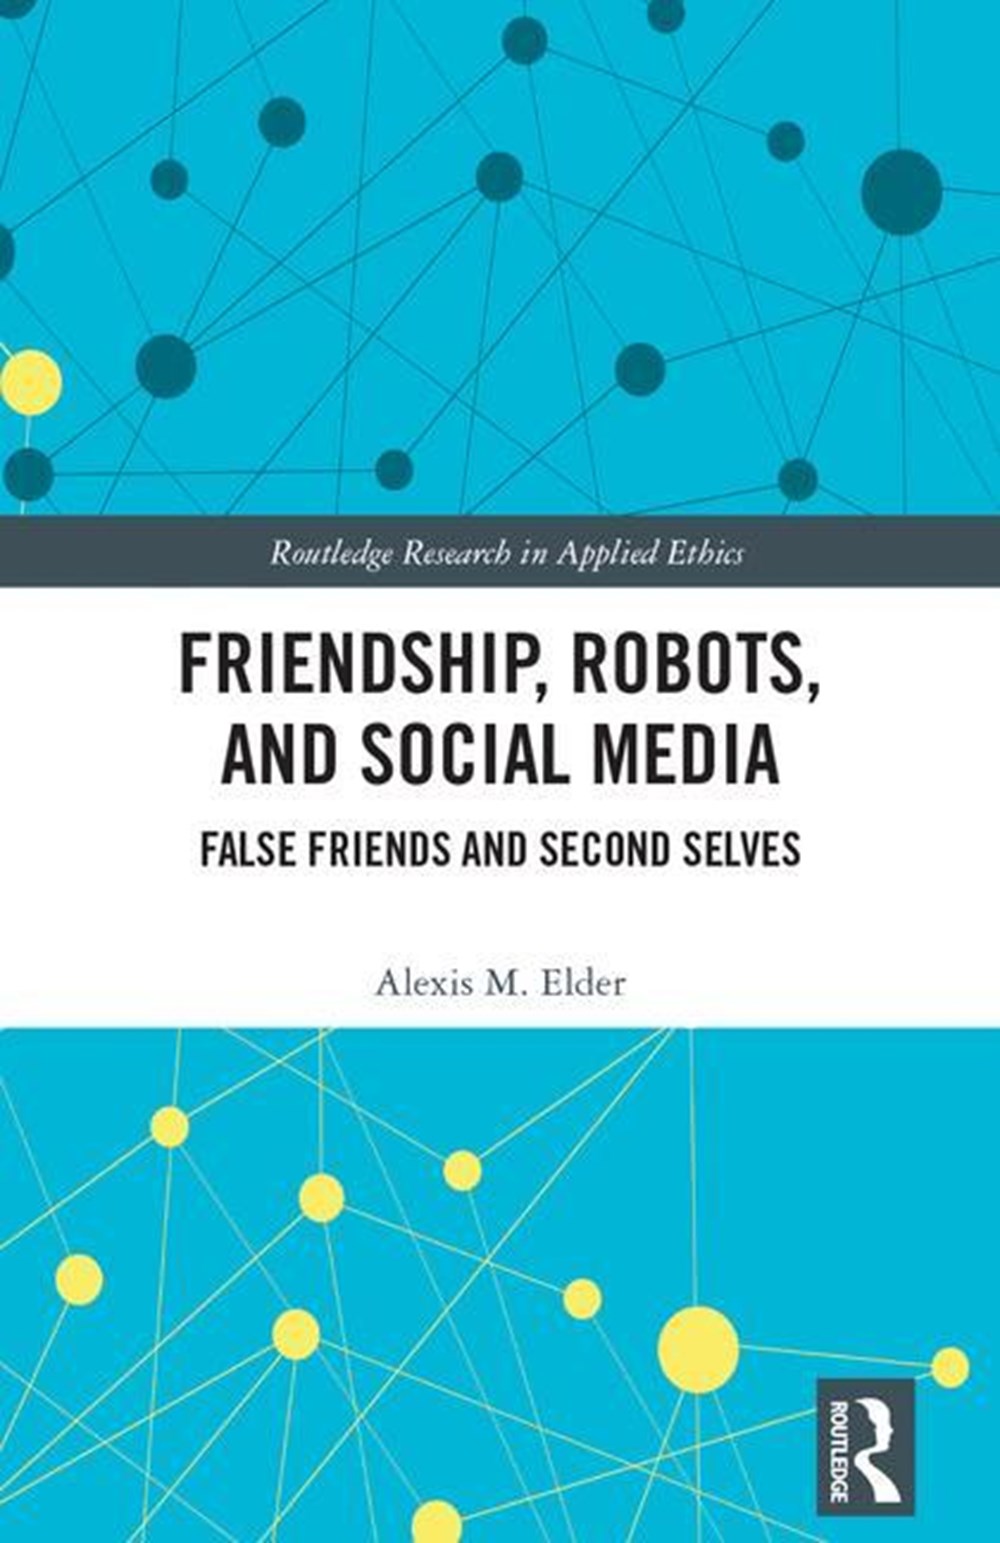 Friendship, Robots, and Social Media : False Friends and Second Selves ร้านหนังสือและสิ่งของ เป็นร้านหนังสือภาษาอังกฤษหายาก และร้านกาแฟ หรือ บุ๊คคาเฟ่ ตั้งอยู่สุขุมวิท กรุงเทพ